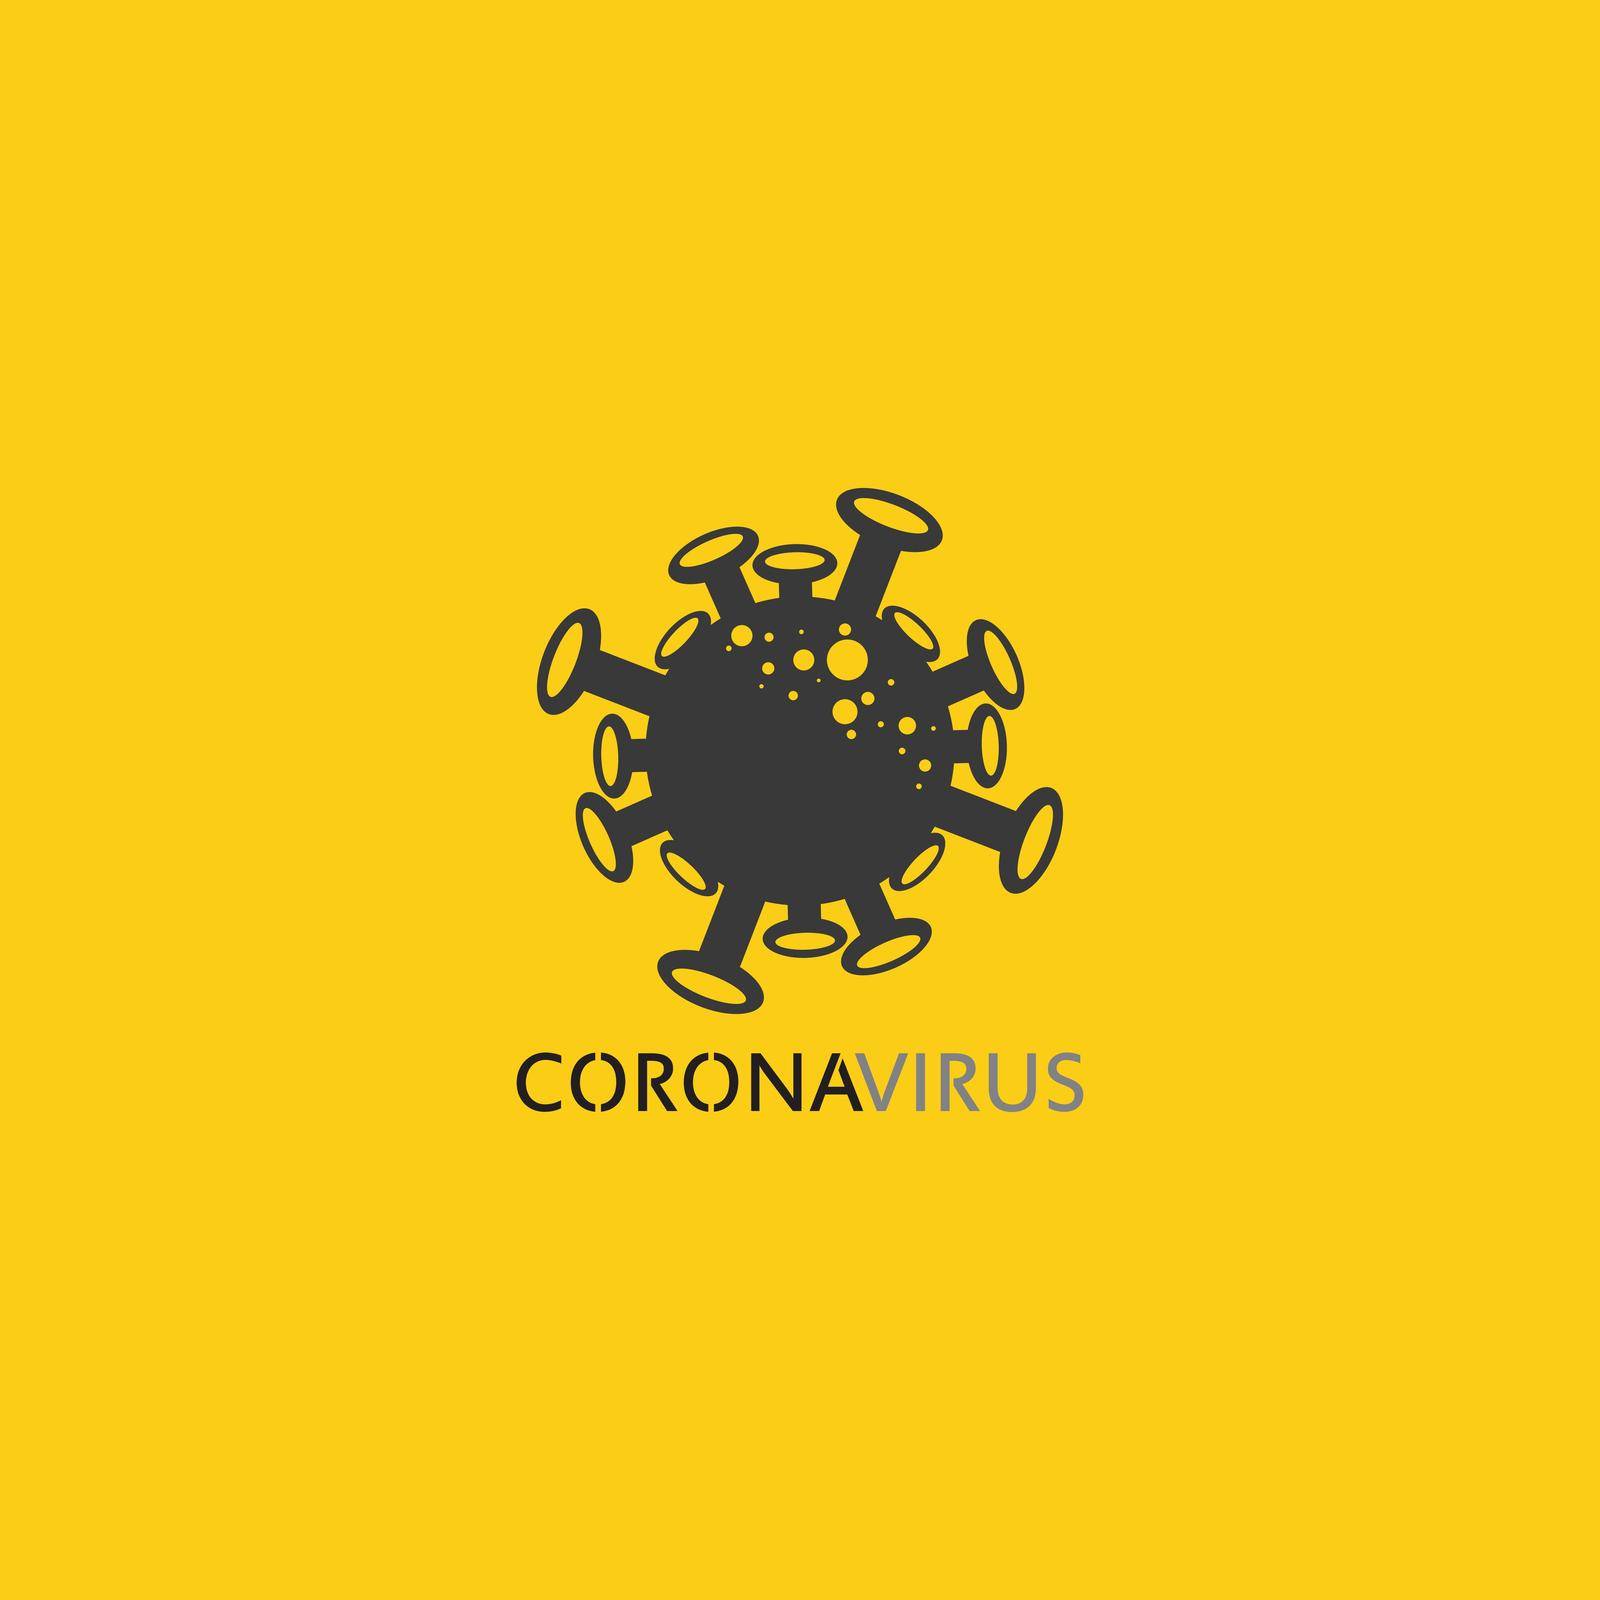 corona virus logo virus vector, vaccin logo,infection bacteria icon and health care danger social distancing pandemic covid 19